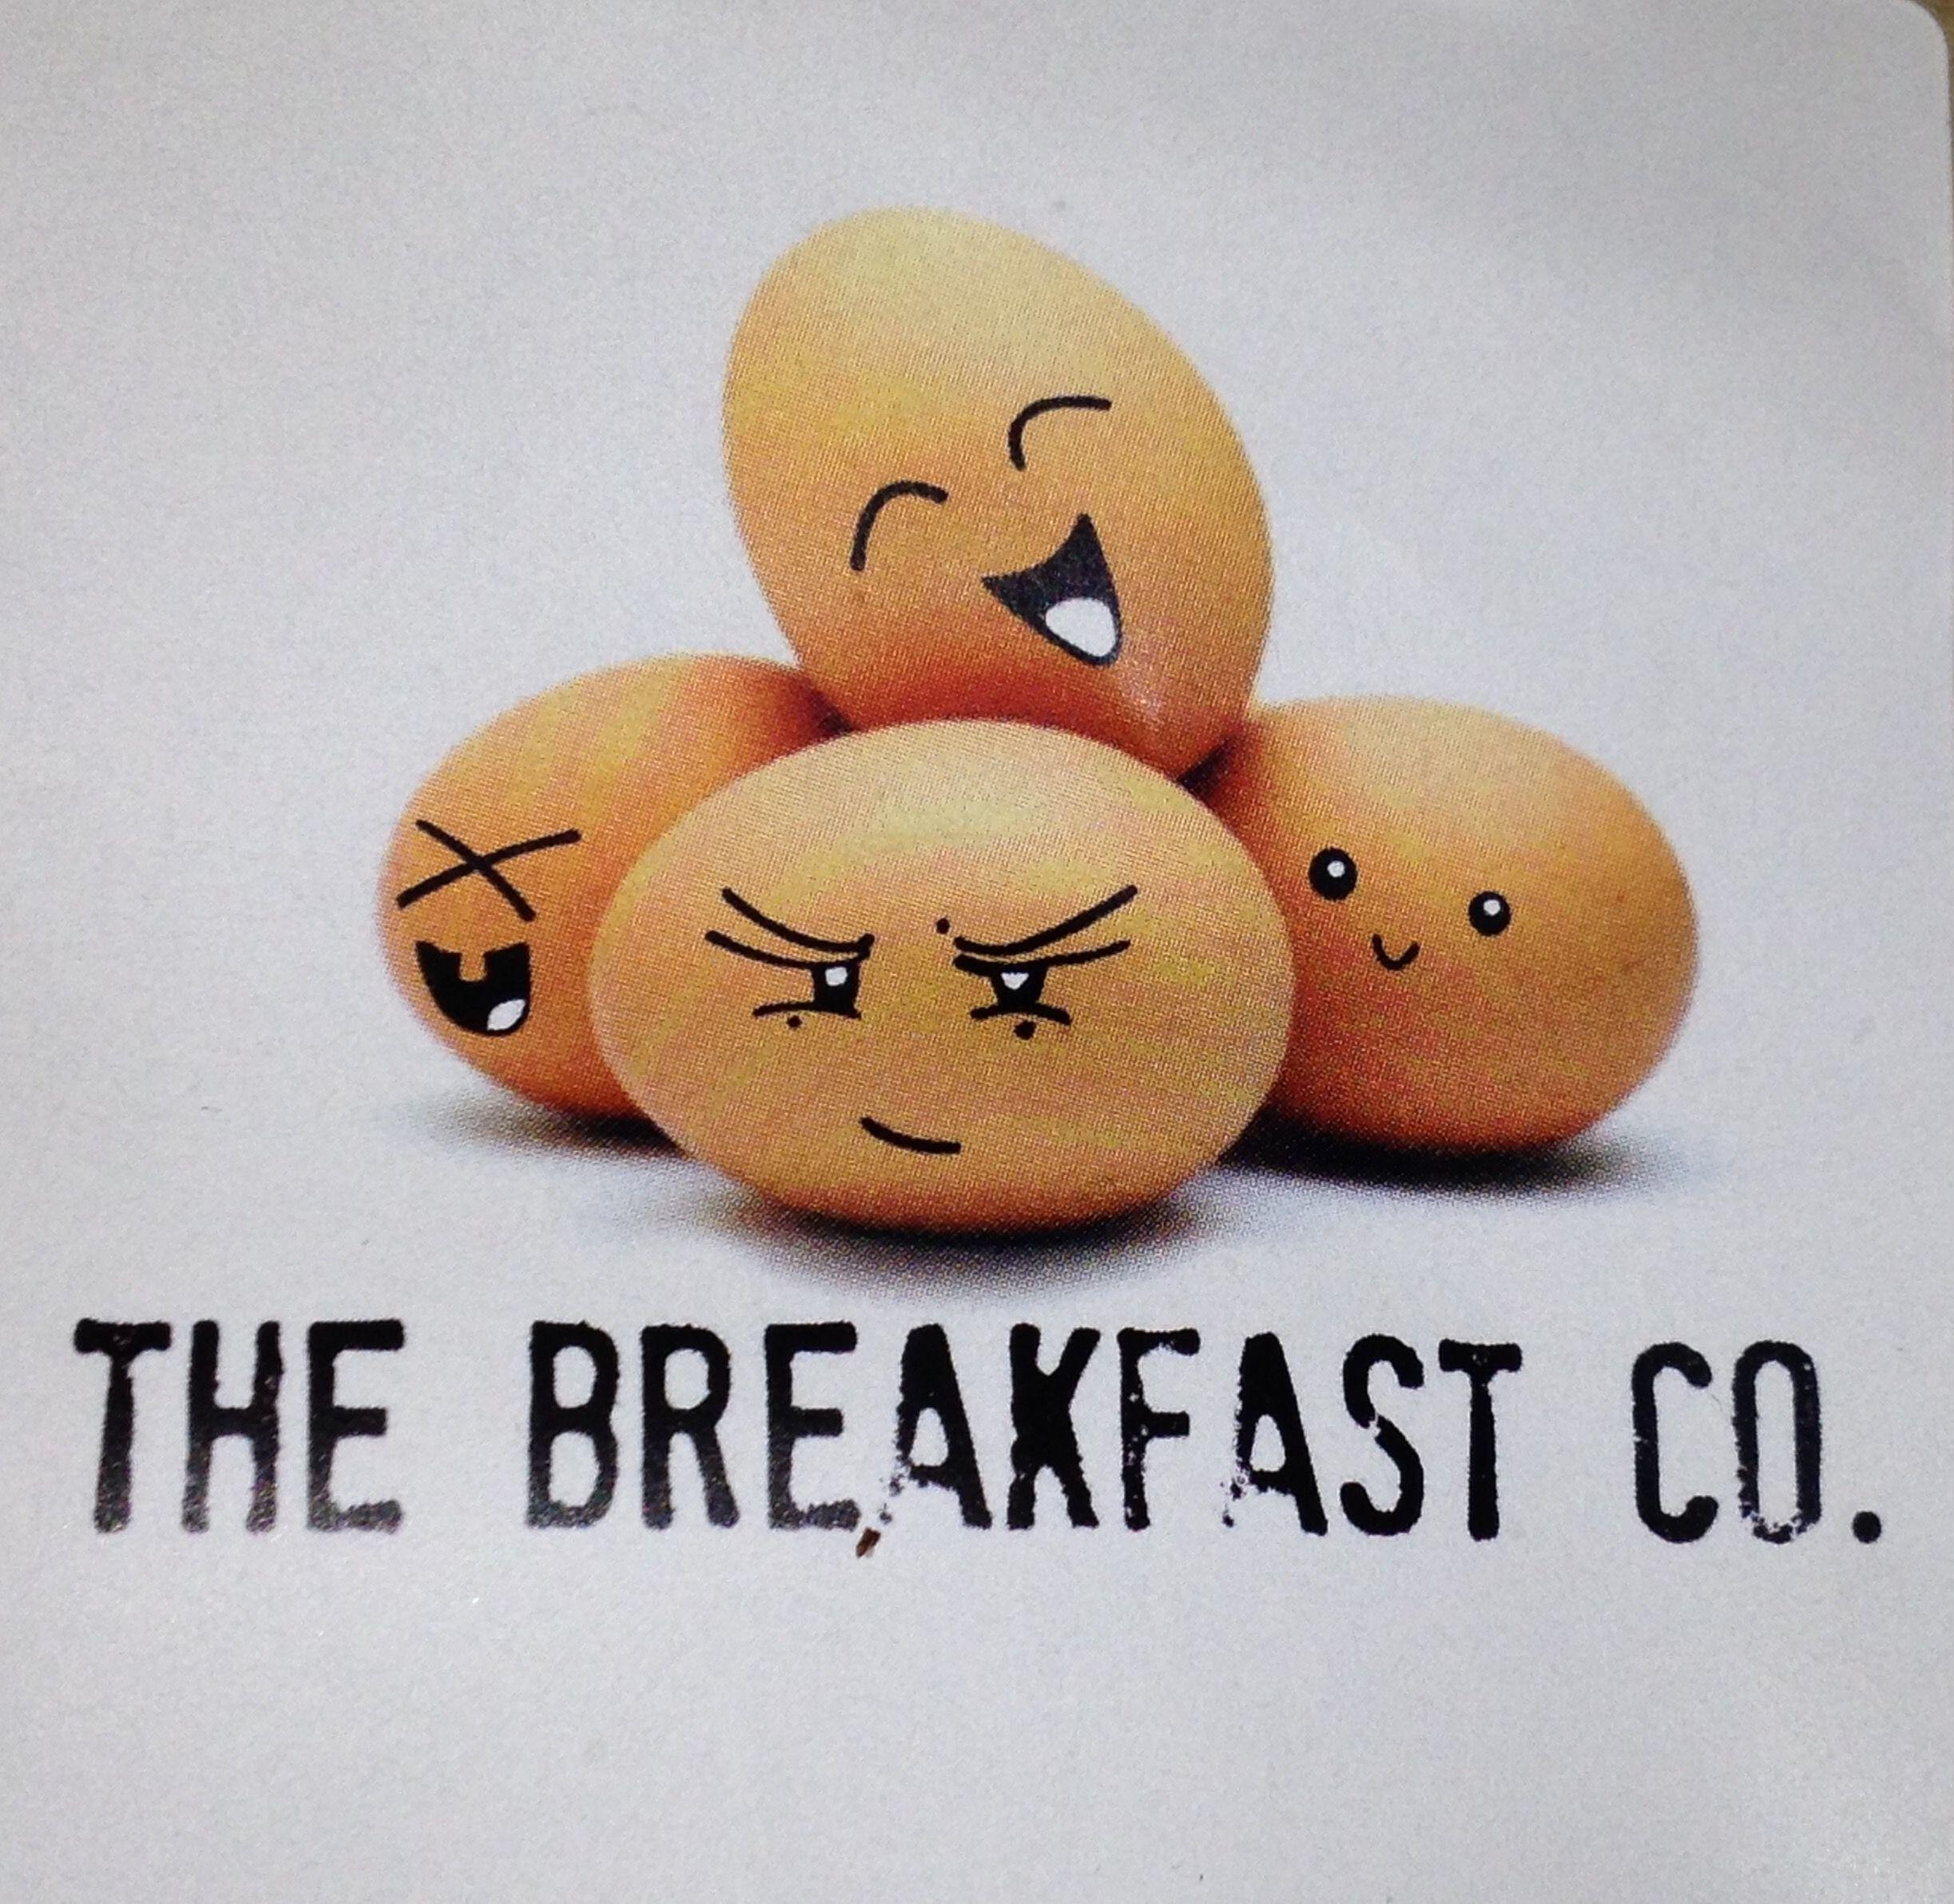 Breakfast Company Logo - The Breakfast Co Delivery Service London Blog